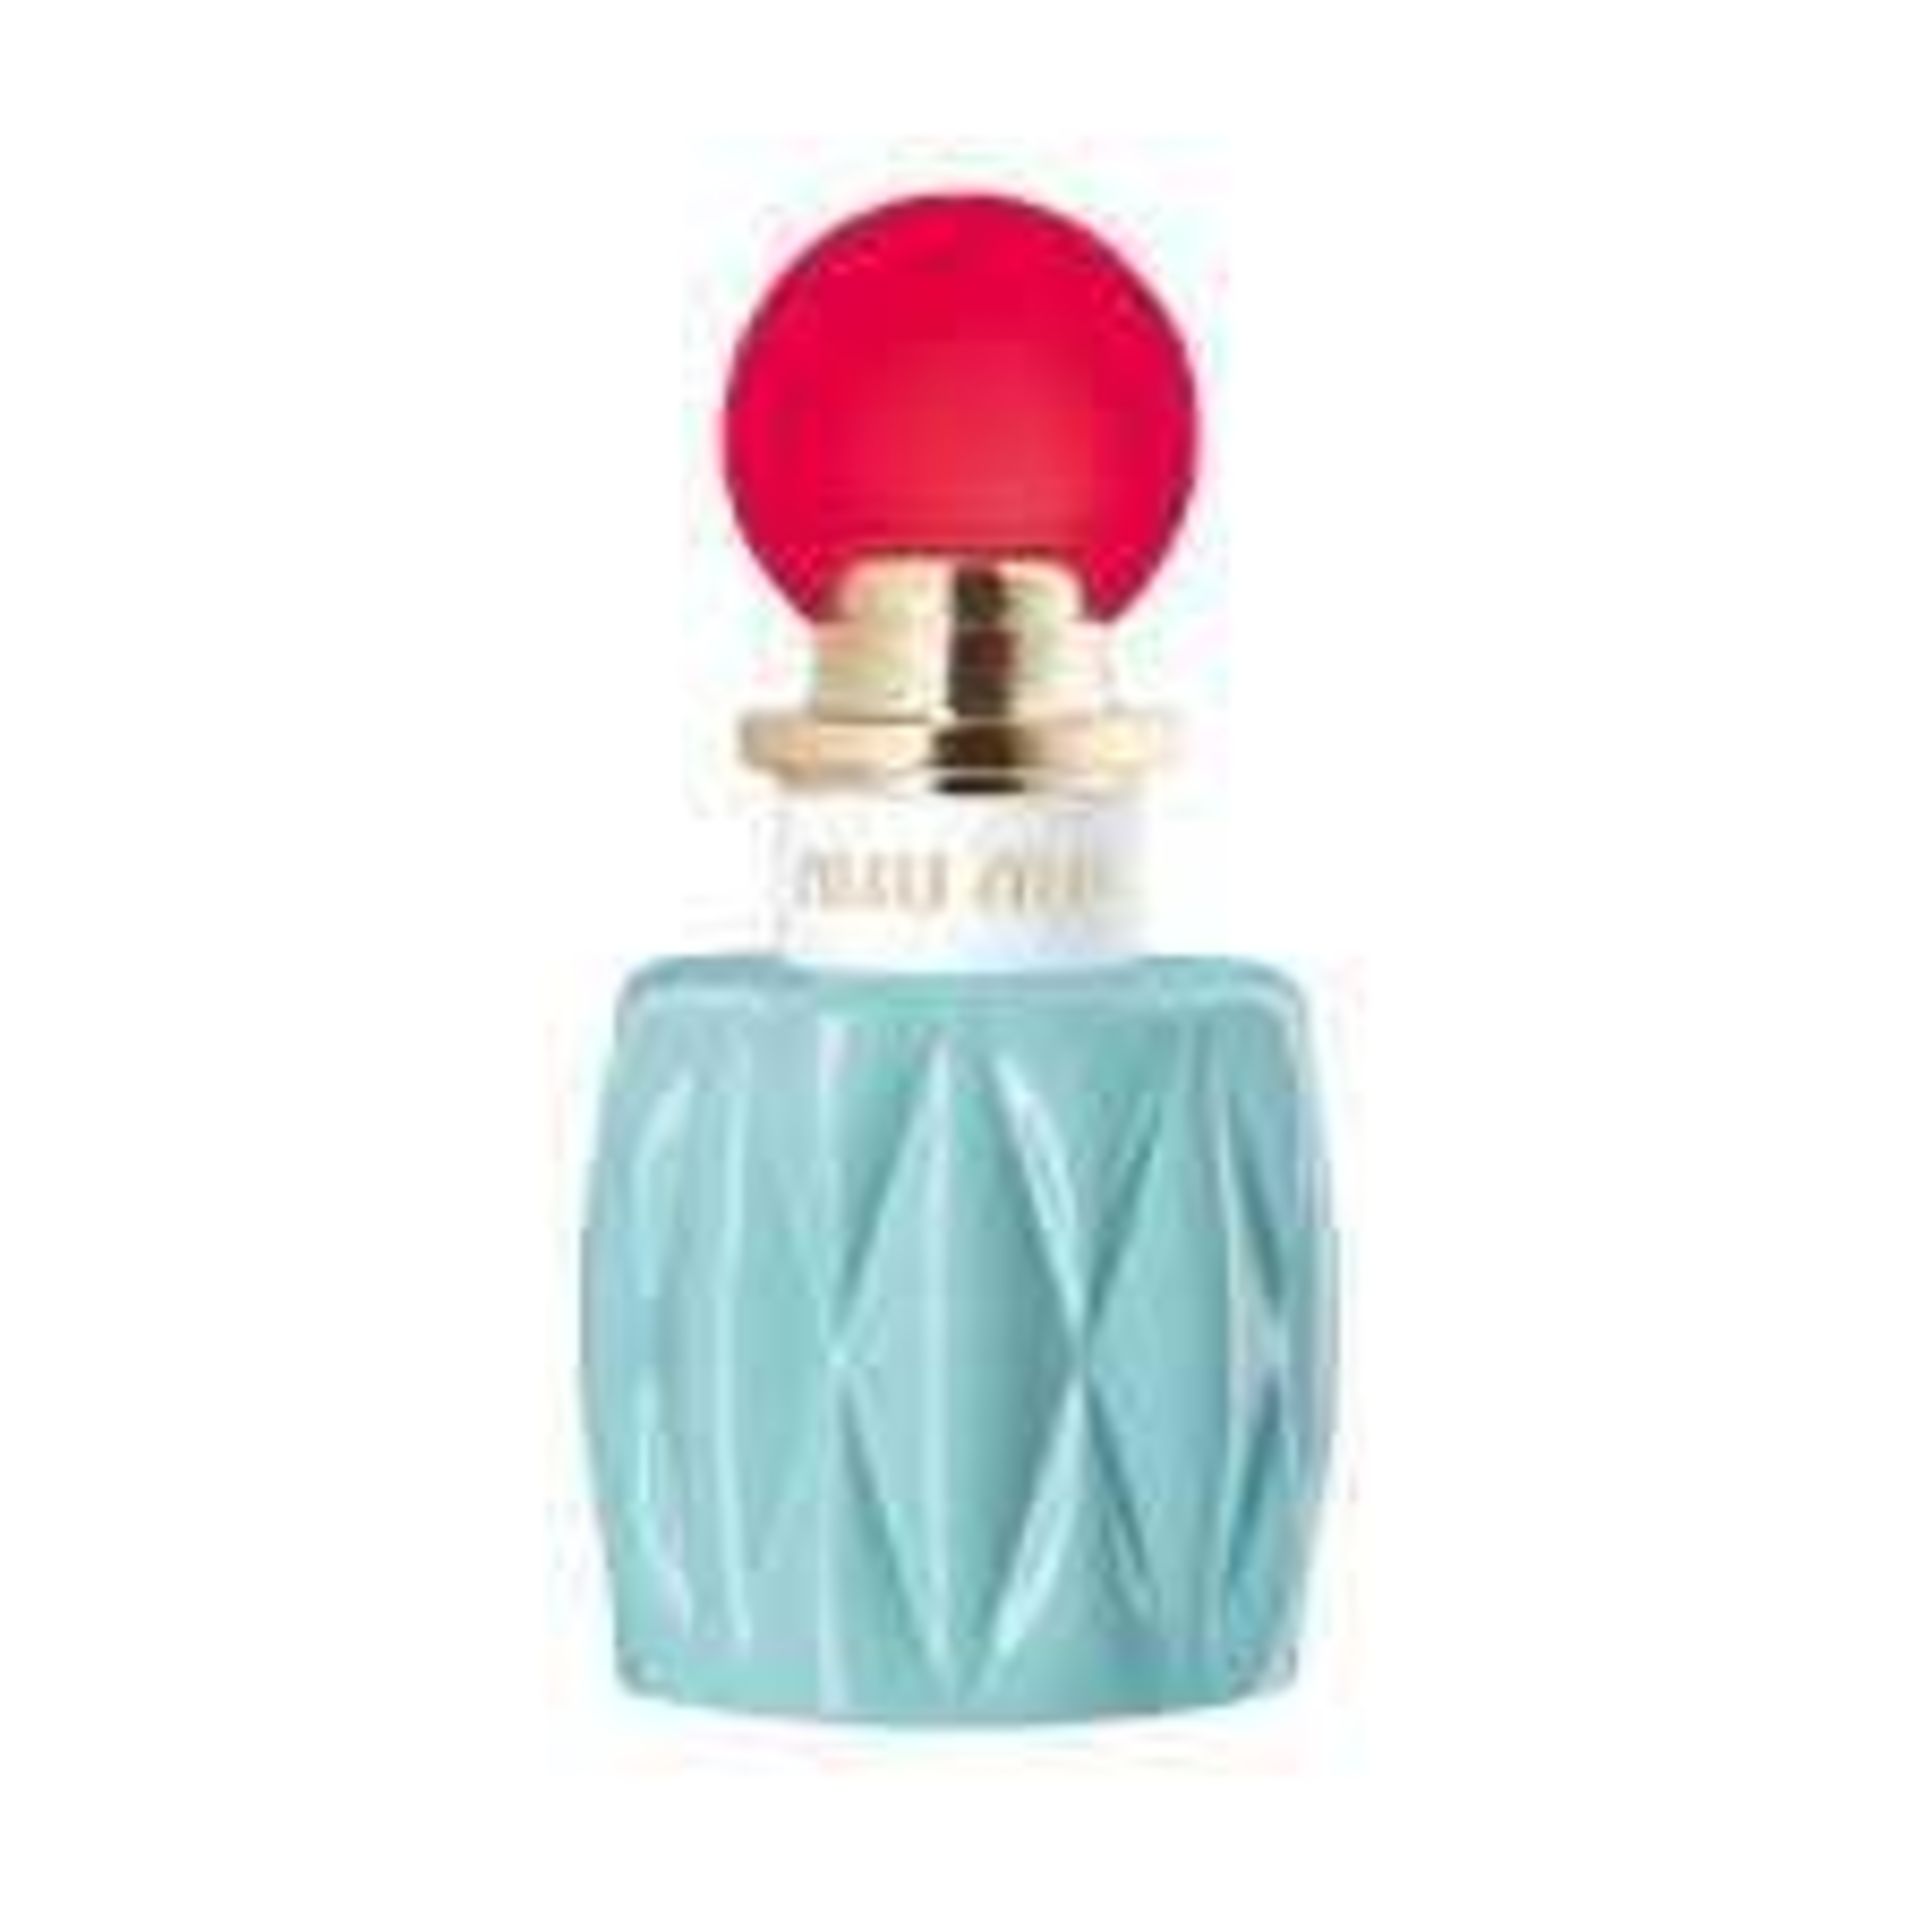 RRP £90 Brand New Boxed Full 100Ml Tester Bottle Of Miu Miu Perfume Spray